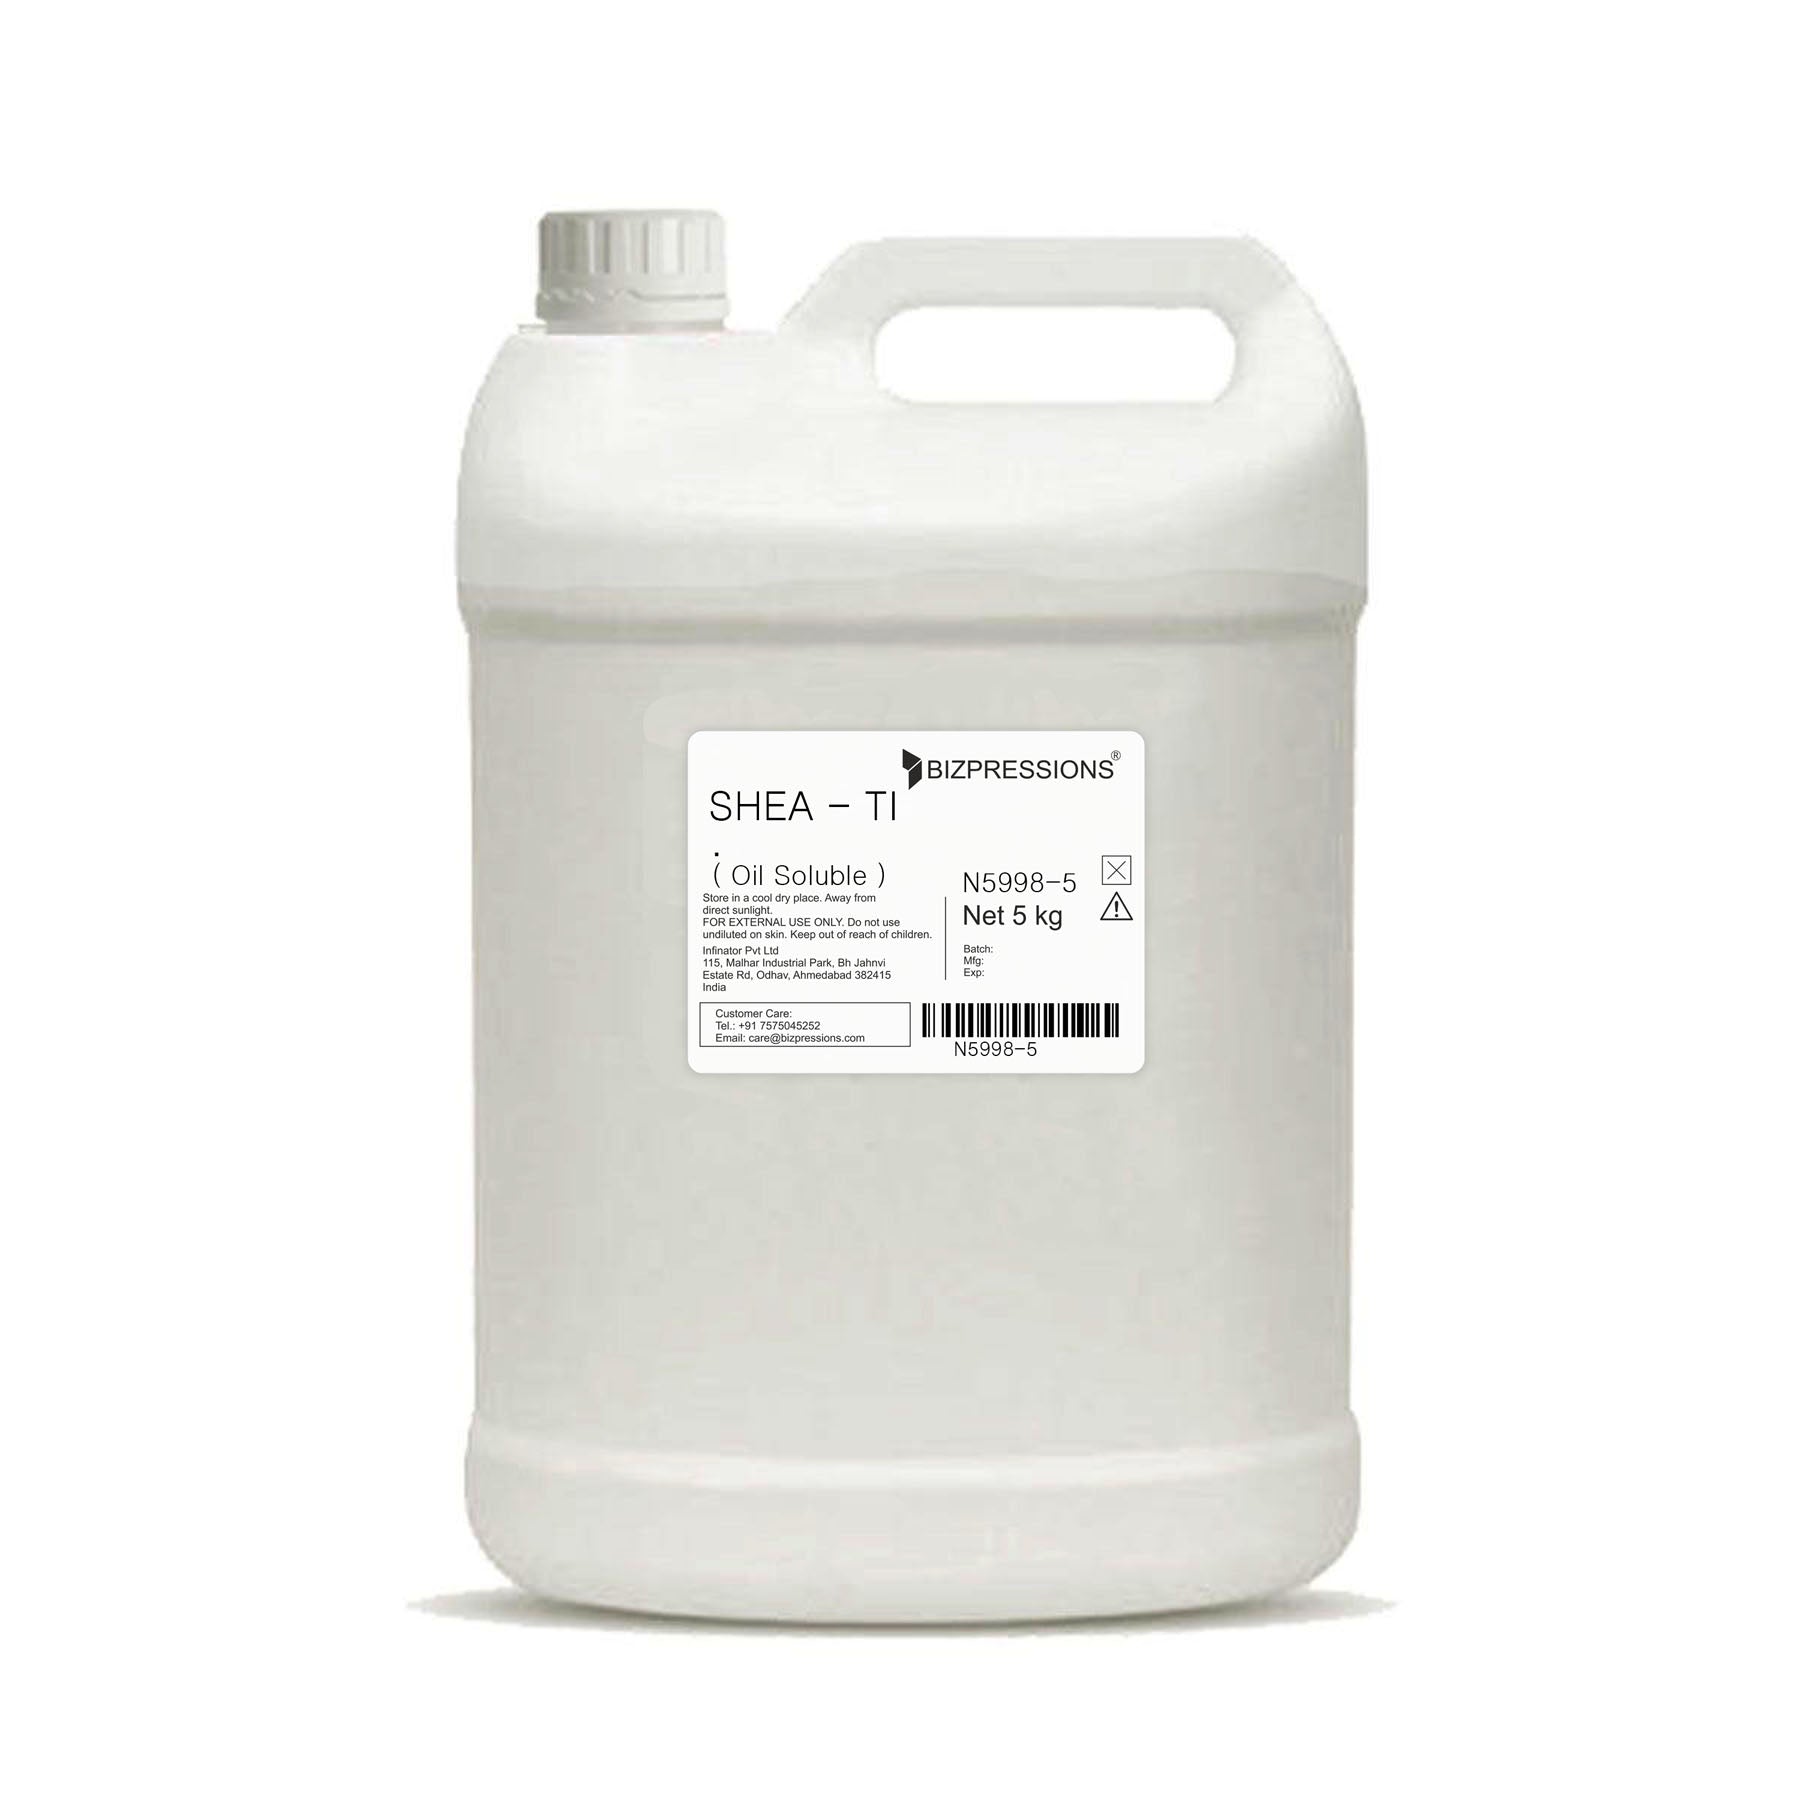 SHEA - TI - Fragrance ( Oil Soluble ) - 5 kg